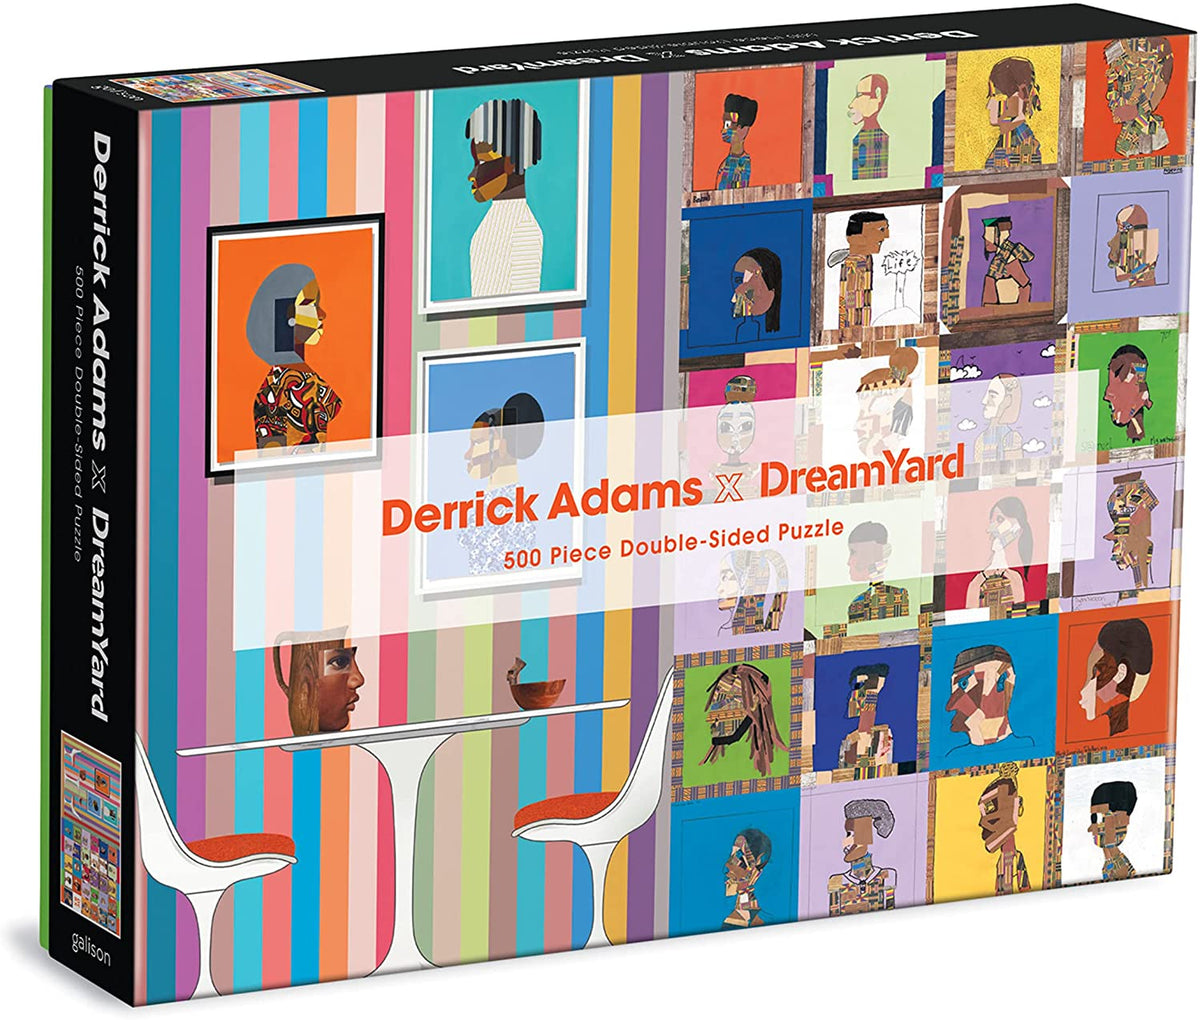 Derrick Adams x Dreamyard 500 Piece Double-Sided Puzzle